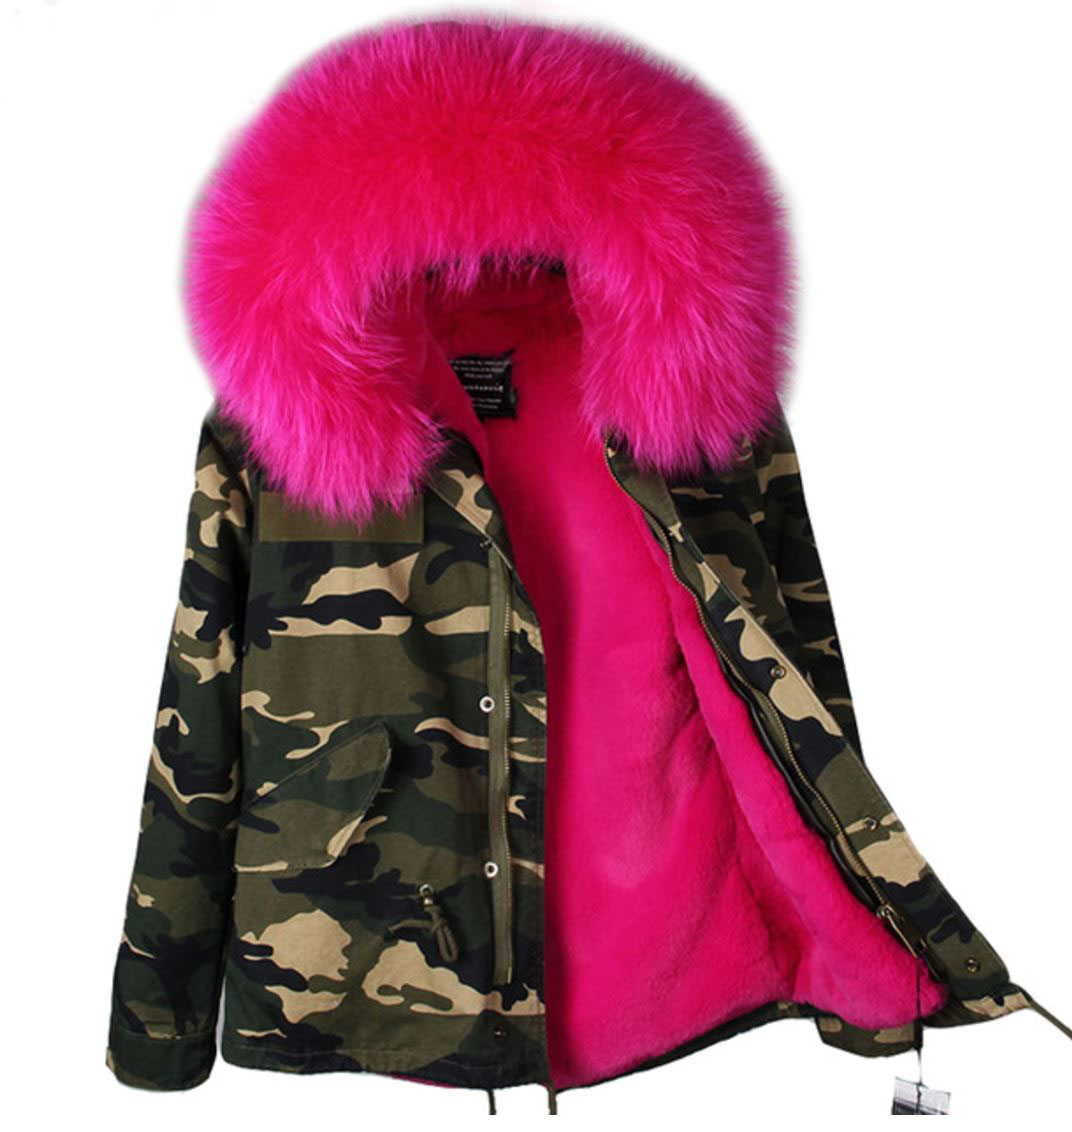 women's parka with pink fur hood